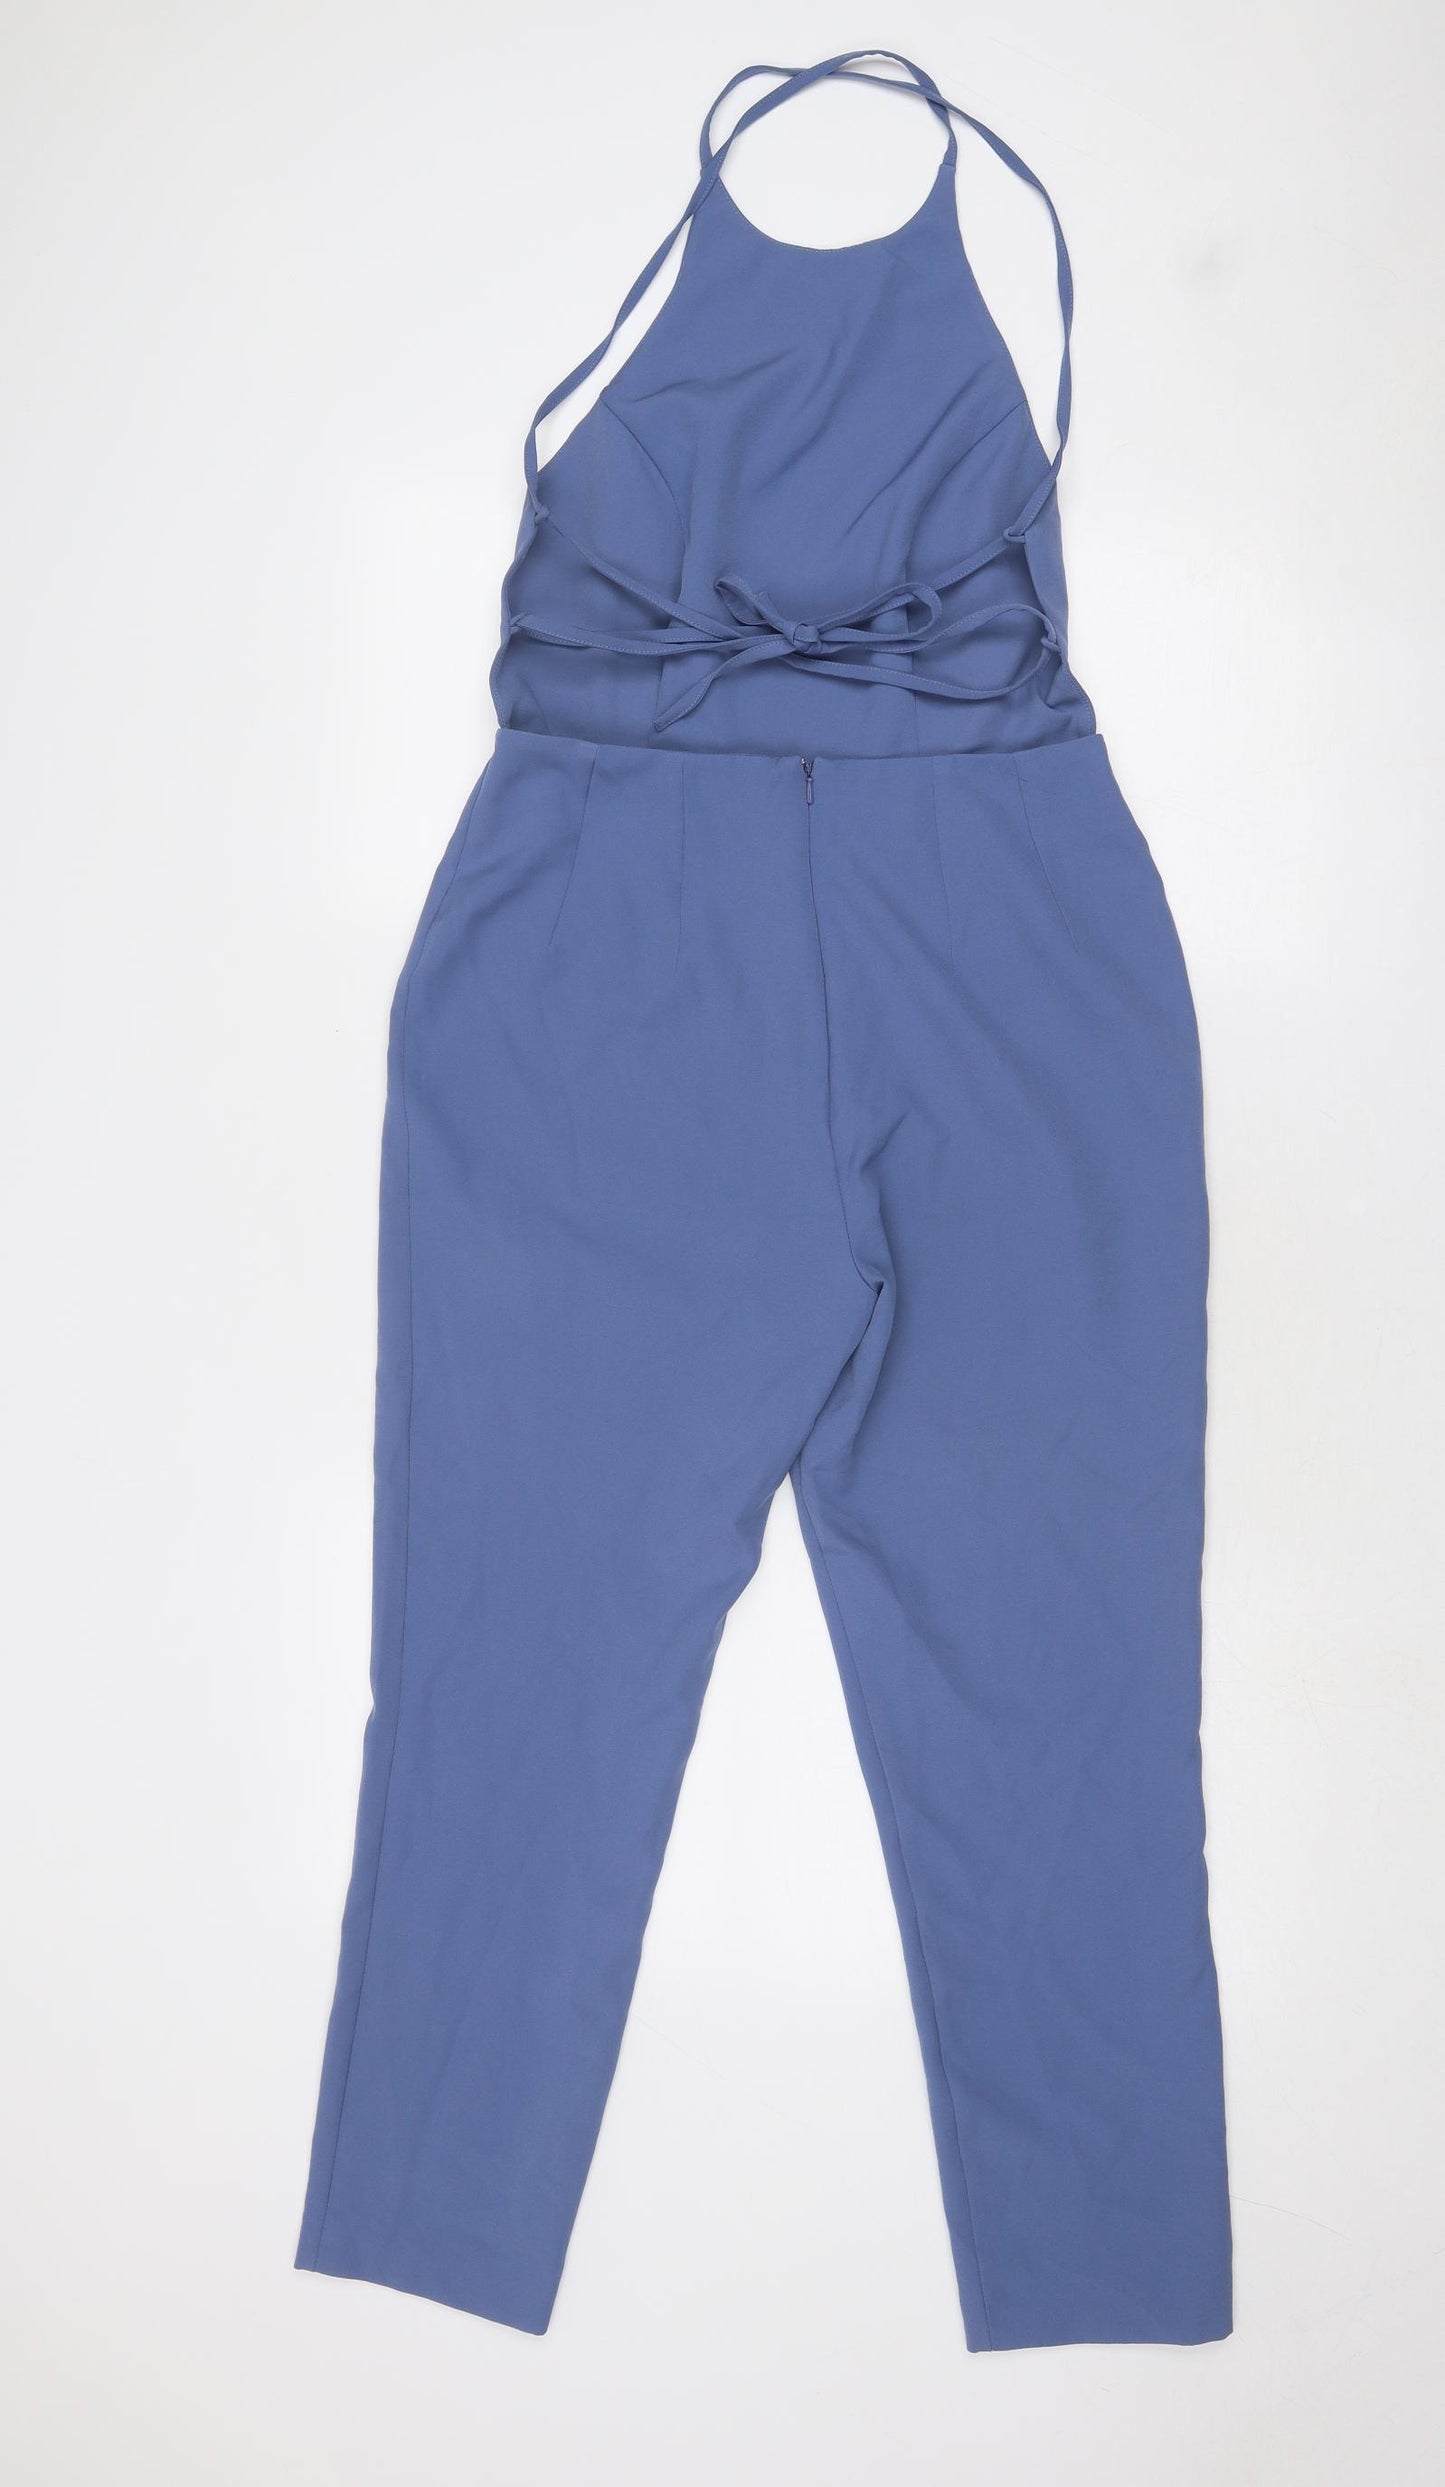 ASOS Womens Purple Polyester Jumpsuit One-Piece Size 10 Zip - Open Back